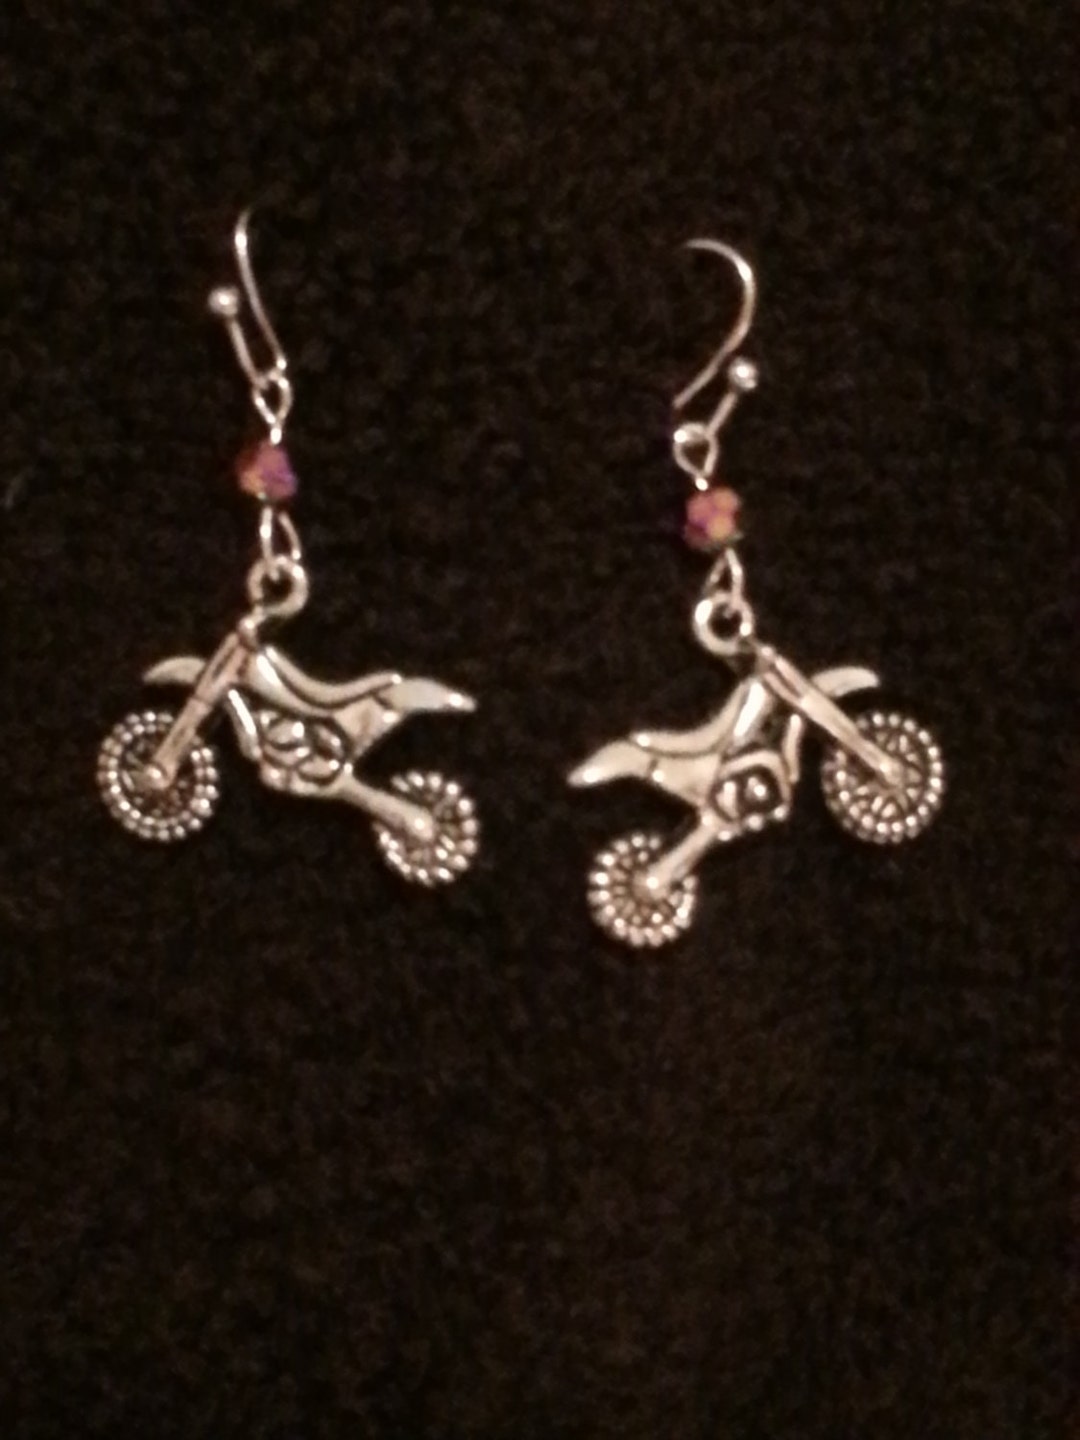 Dirt Bike earrings with Iridescent bead - Etsy.de